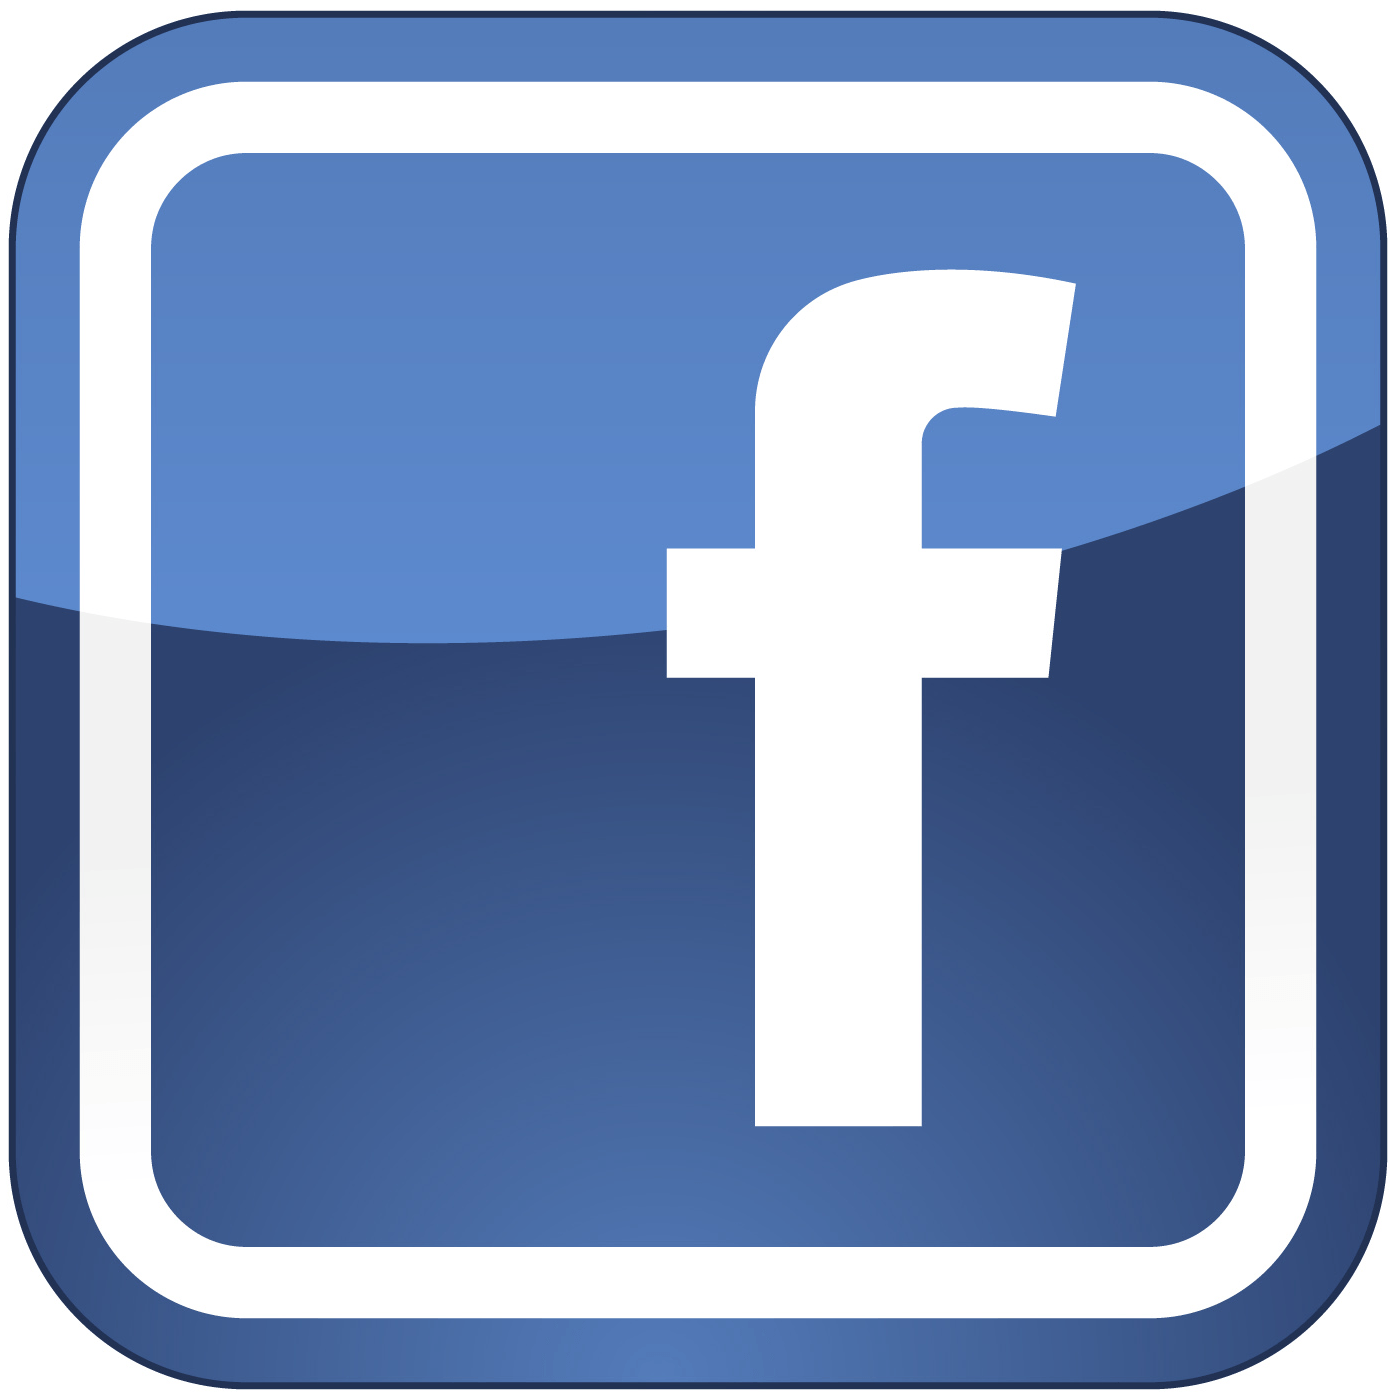 Fackbook Logo - Facebook-logo-icon-vectorcopy-big_copy | Sherwood Park Toyota